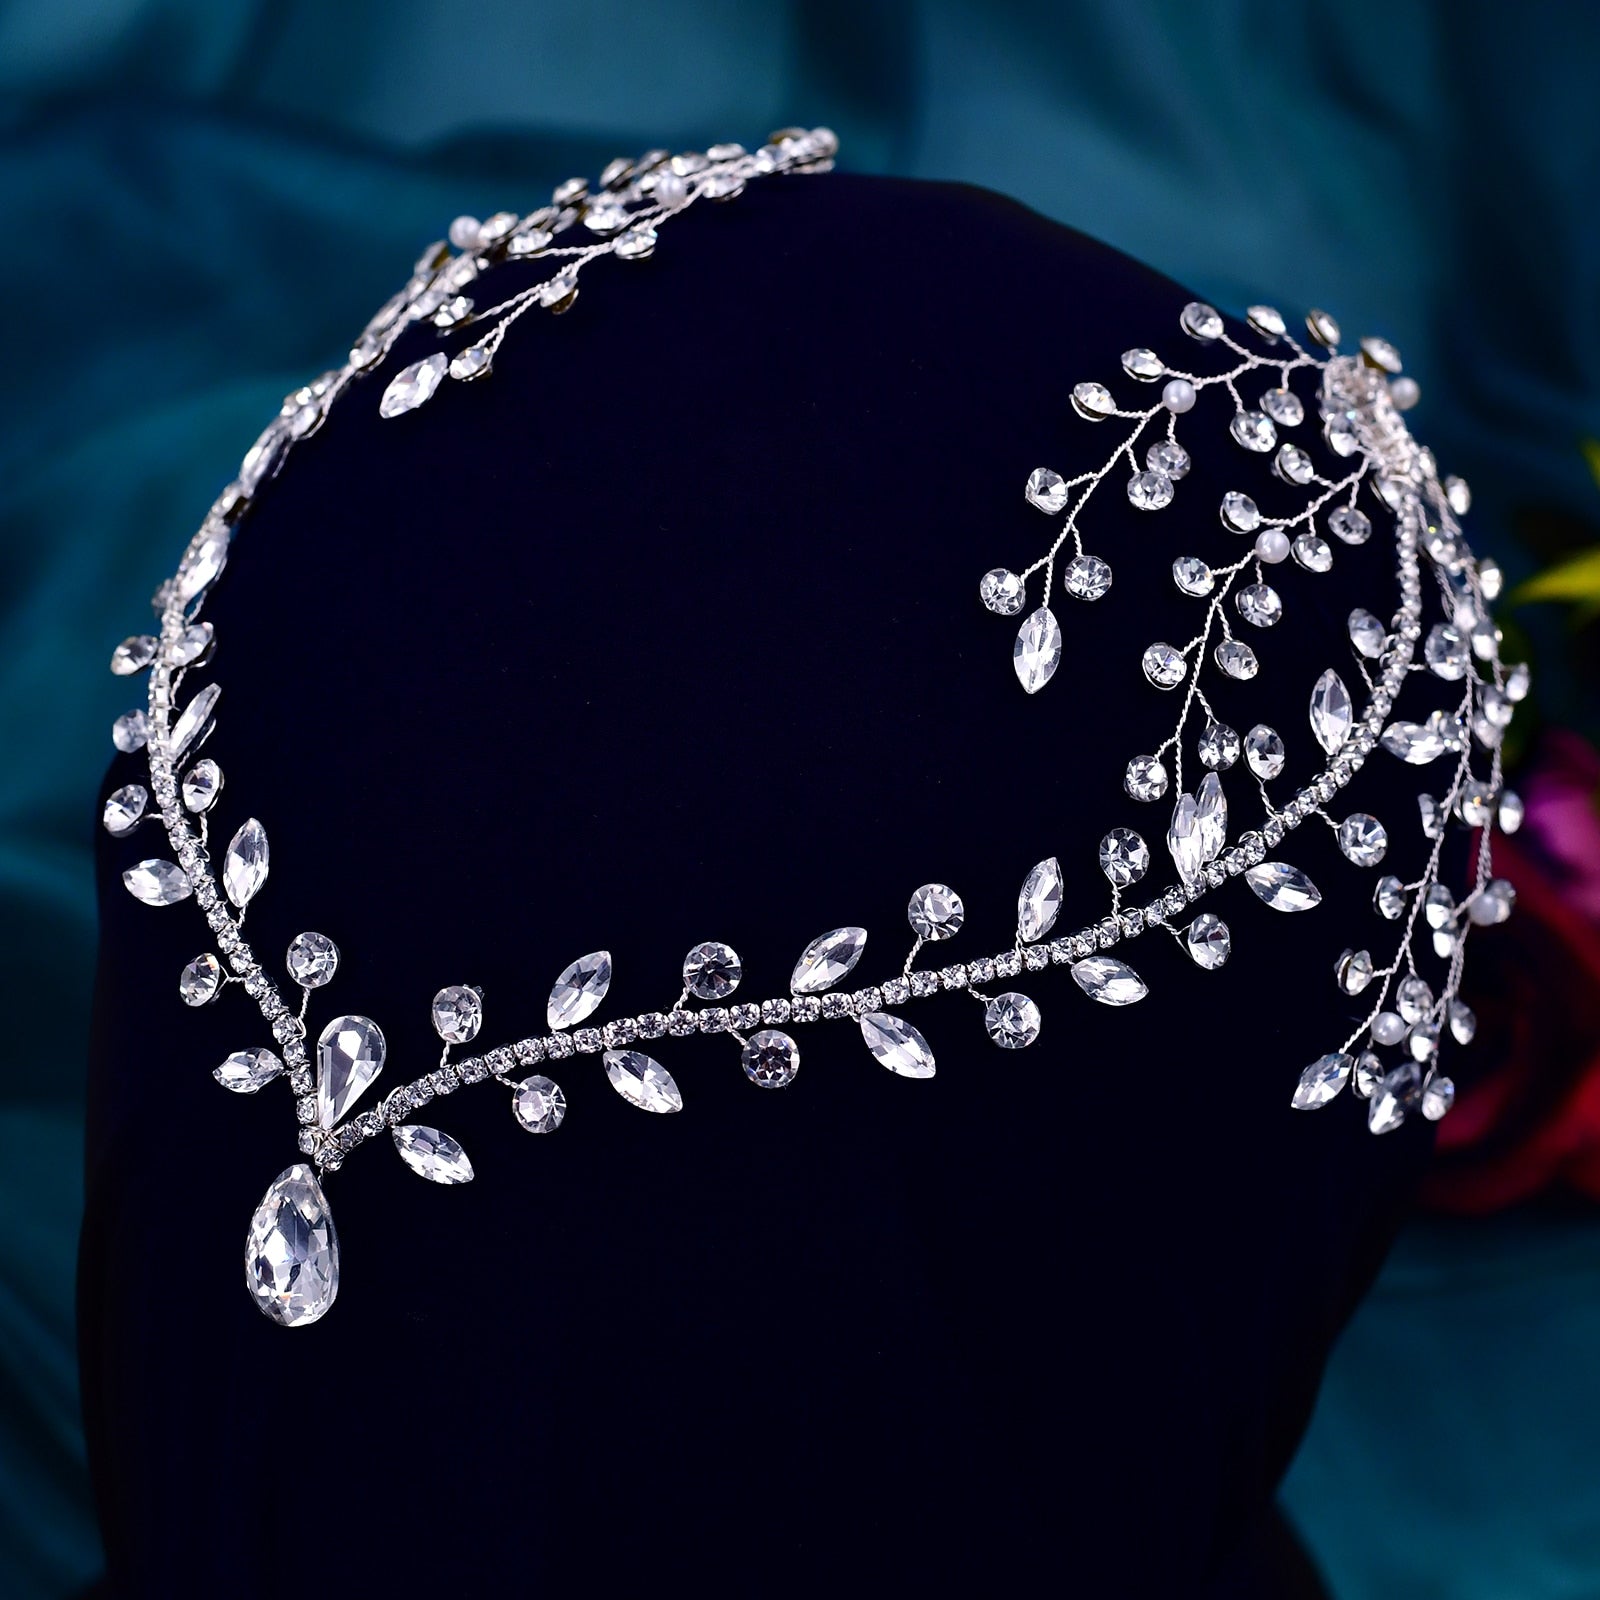 Fashionsarah.com Rhinestone Tiara Pageant Crown Wedding